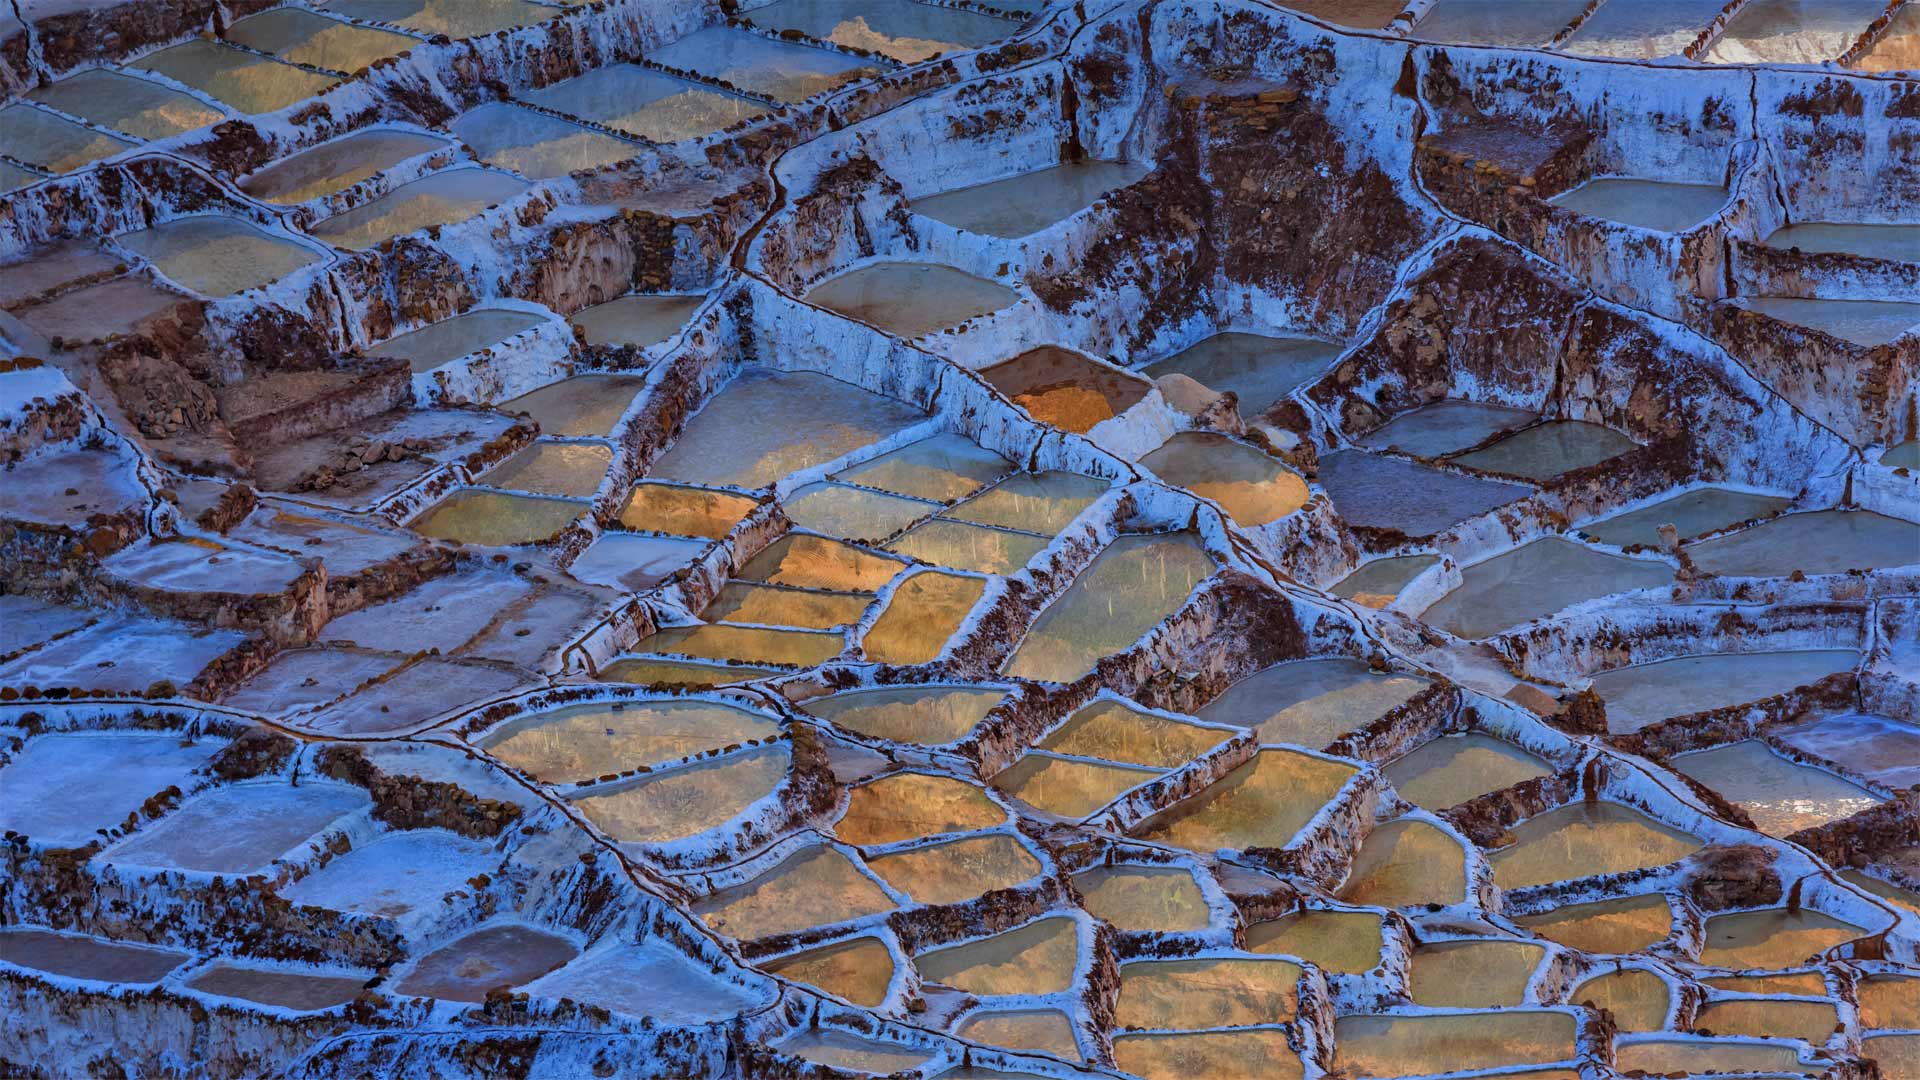 Salt ponds of Maras in Peru's Sacred Valley of the Incas - Fotofeeling/Westend61 on Offset/Shutterstock)